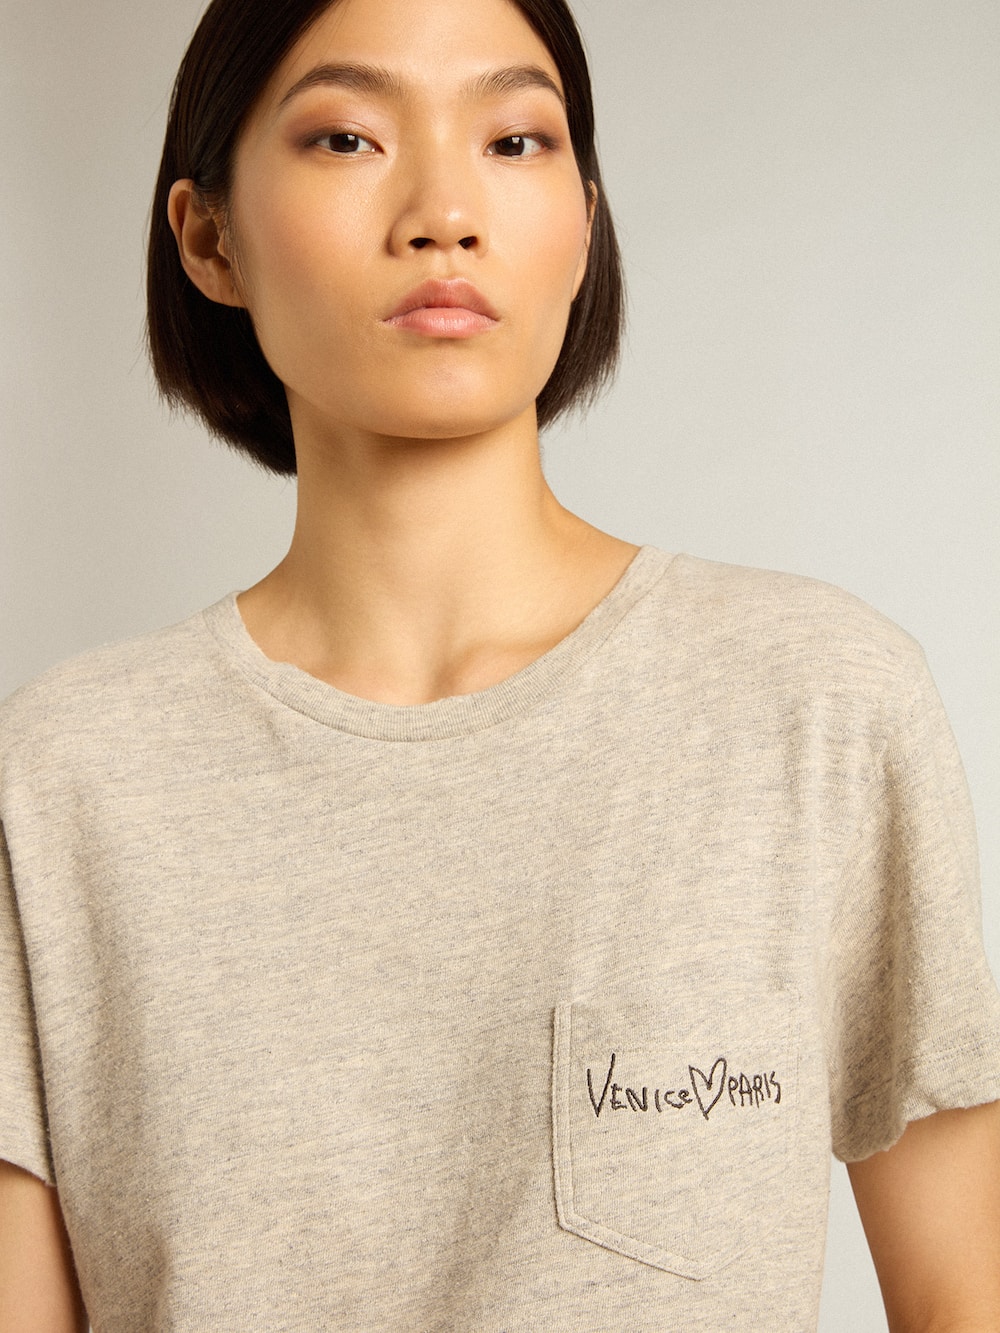 Golden Goose - T-Shirt da donna in cotone color grigio melange e scritta ricamata in 